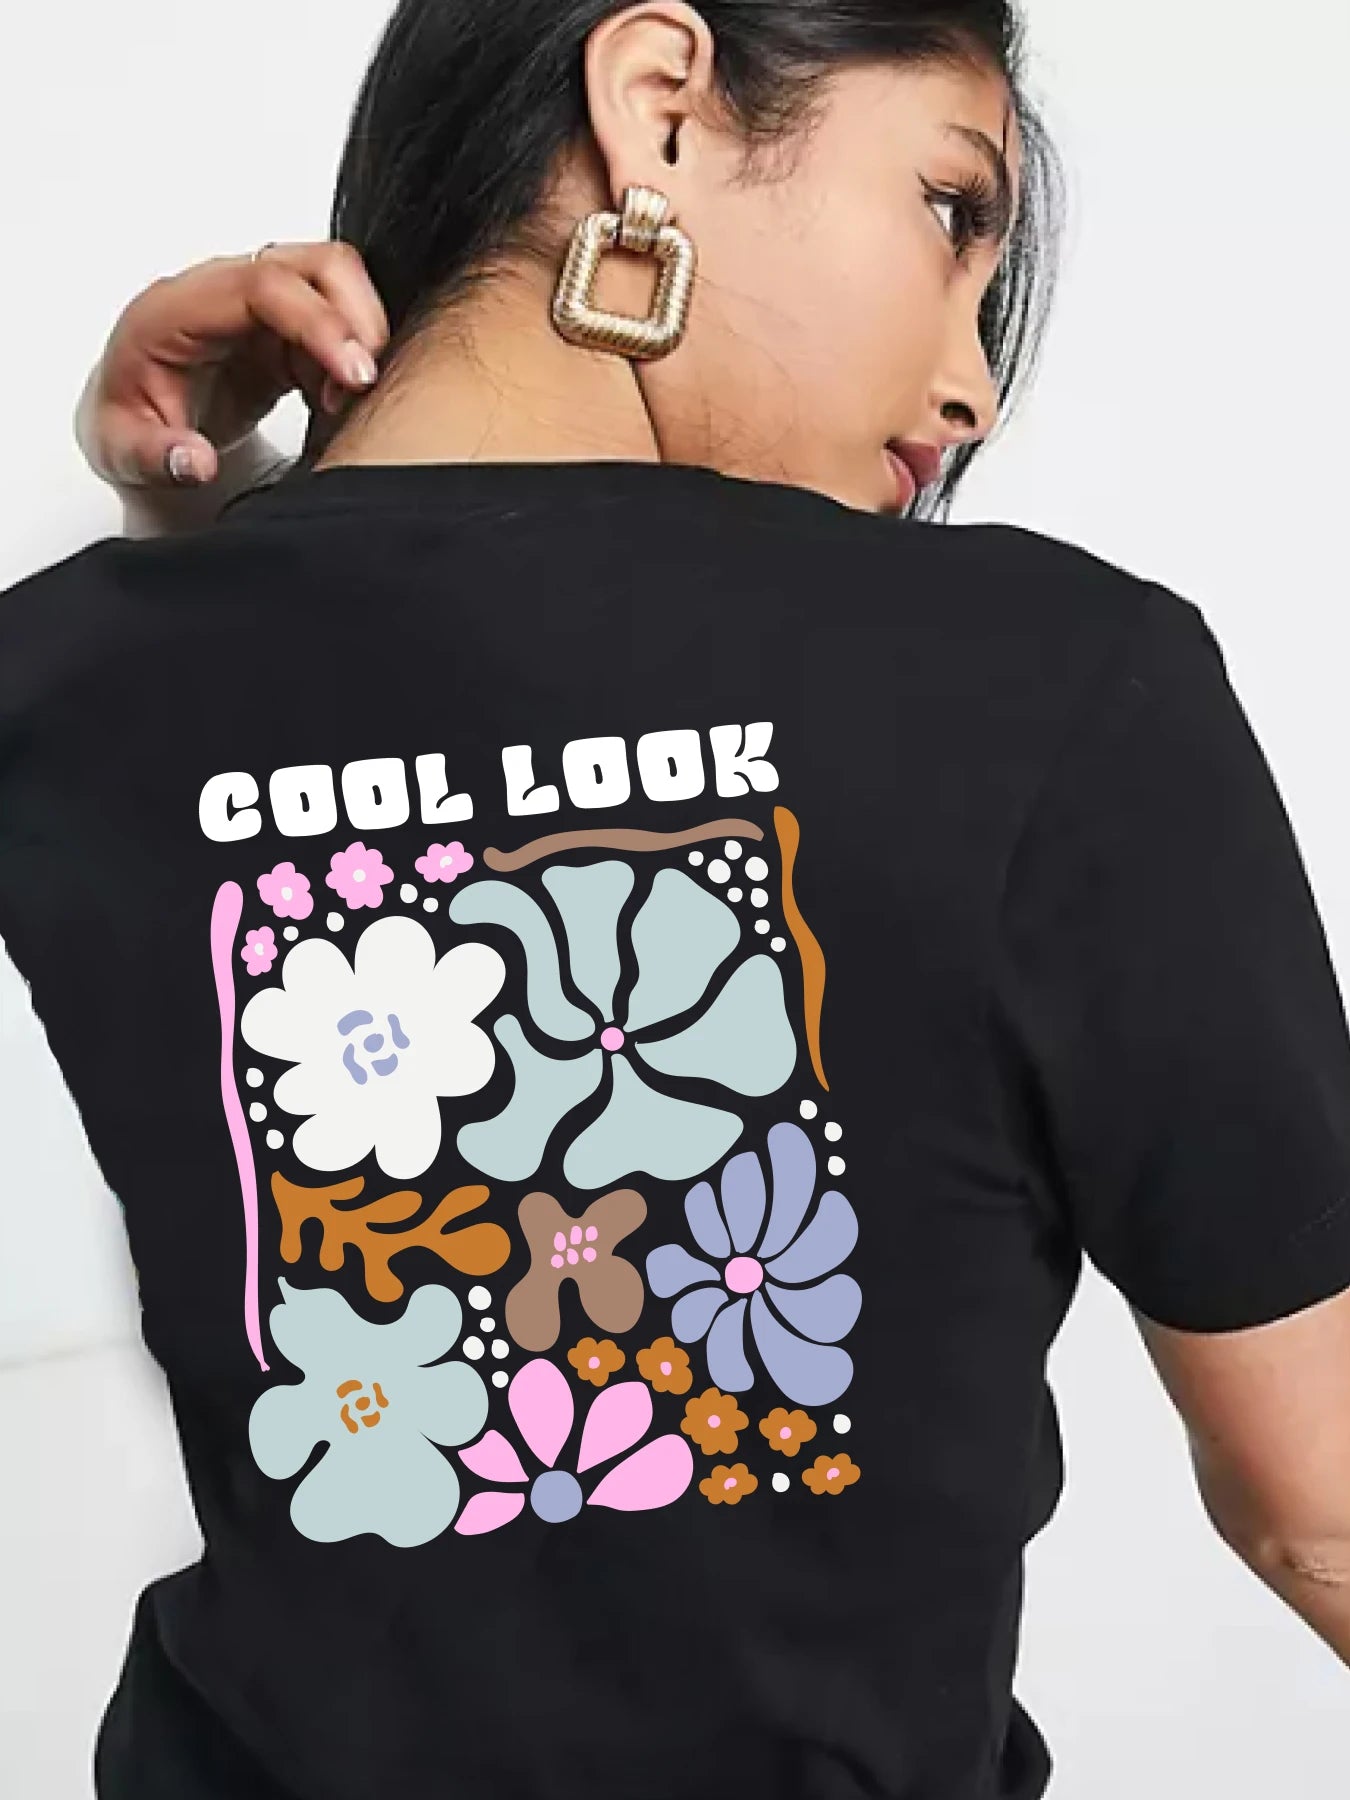 Cool Look - T-Shirt